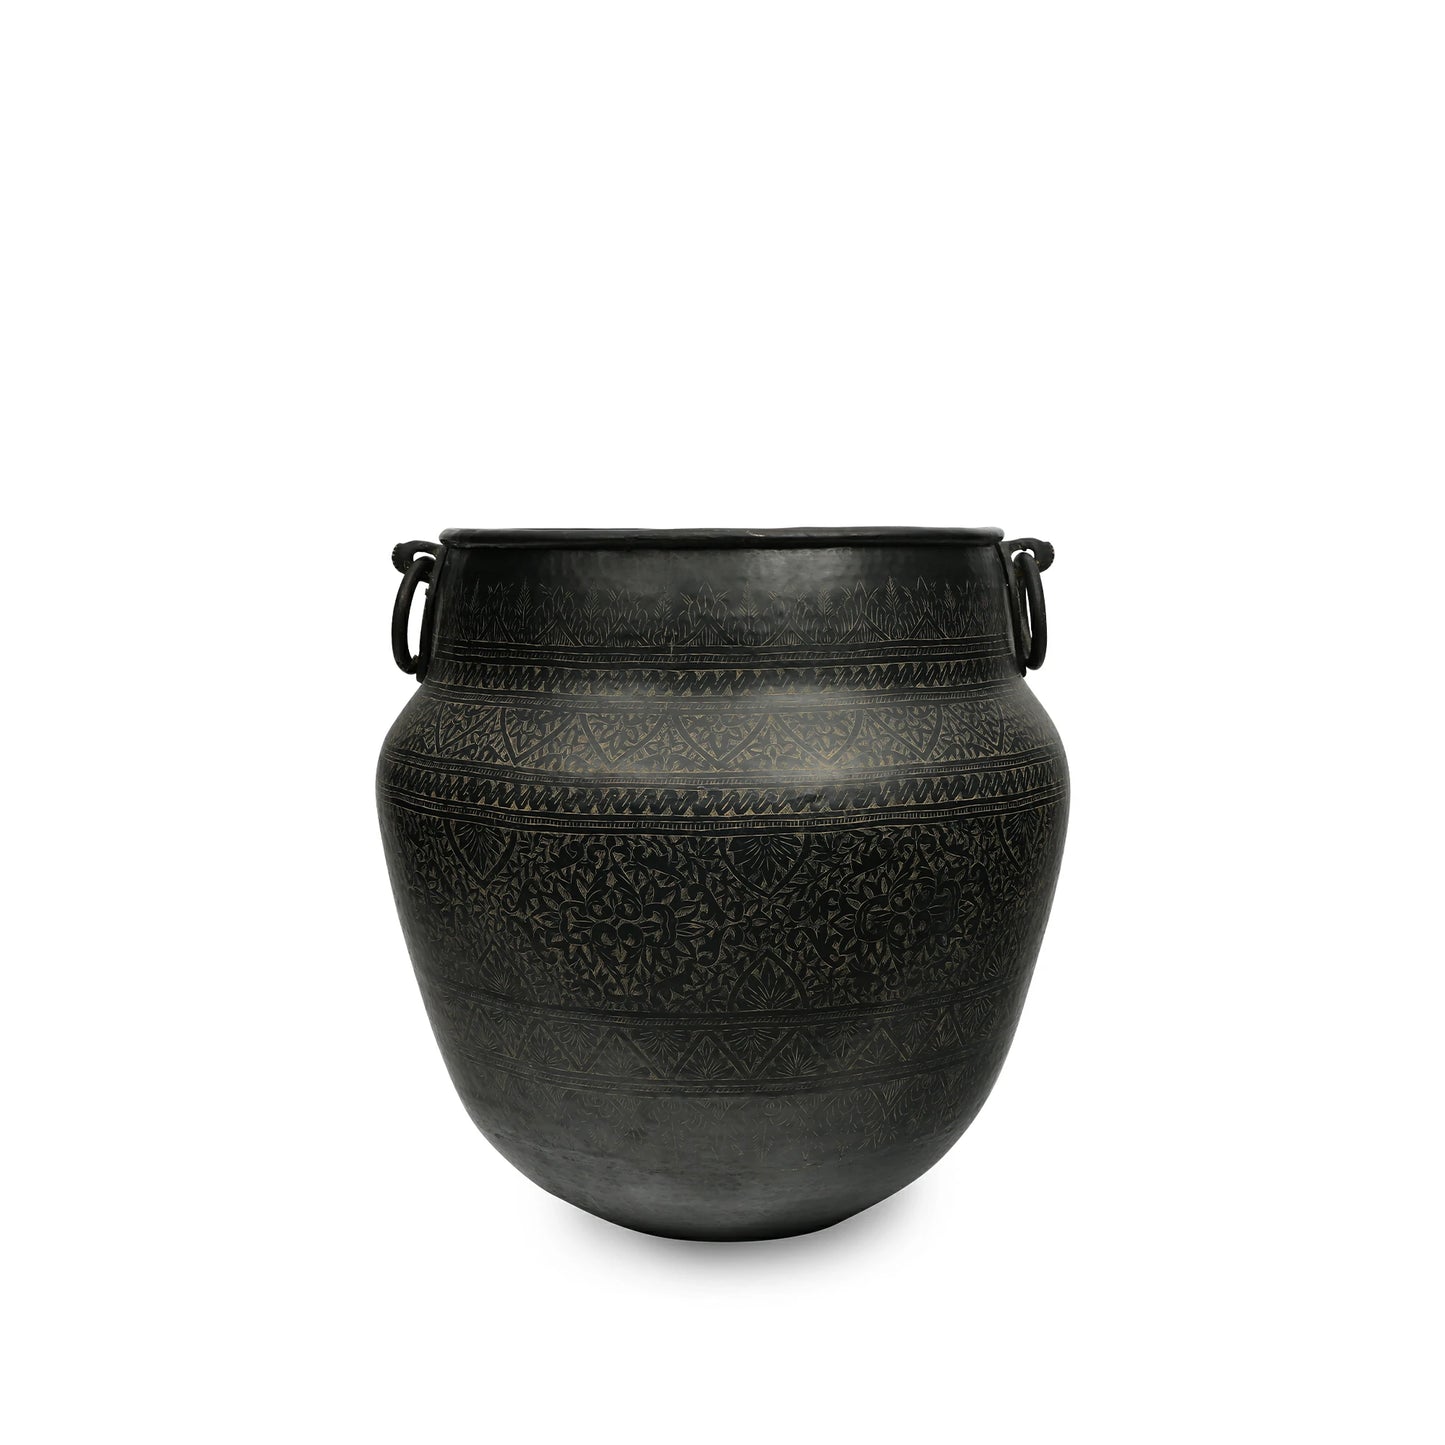 Fine Patinated Antique Brass Pot with Primitive Floral Motifs for Home Decor